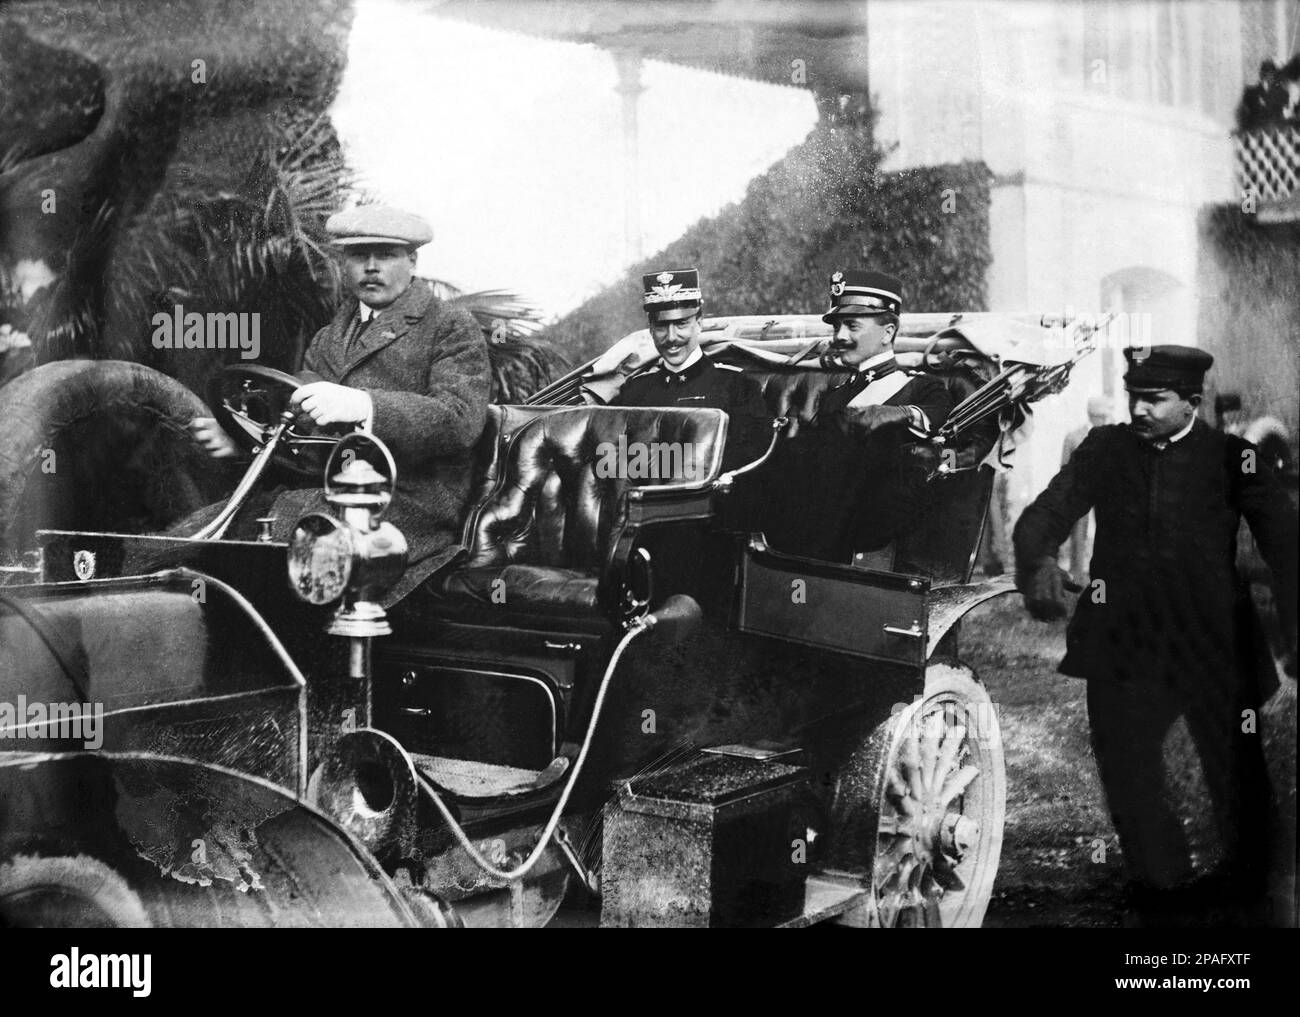 1900 Ca: Der italienische Prinz VITTORIO EMANUELE SAVOIA - AOSTA Conte di TORINO ( 1870 - 1946 ) Tenent der Kavallerie Nizza Cavalleria während des Ersten Weltkriegs ( links auf diesem Foto ) - Royal - nobili italiani - Nobiltà - principe reale - ITALIA - Halsband - colletto - Militäruniform - uniforme divisa militare - Baffi - Schnurrbart - Savoia-Aosta - lächeln - sorriso - Auto - Auto - Auto ----- ARCHIVIO GBB Stockfoto